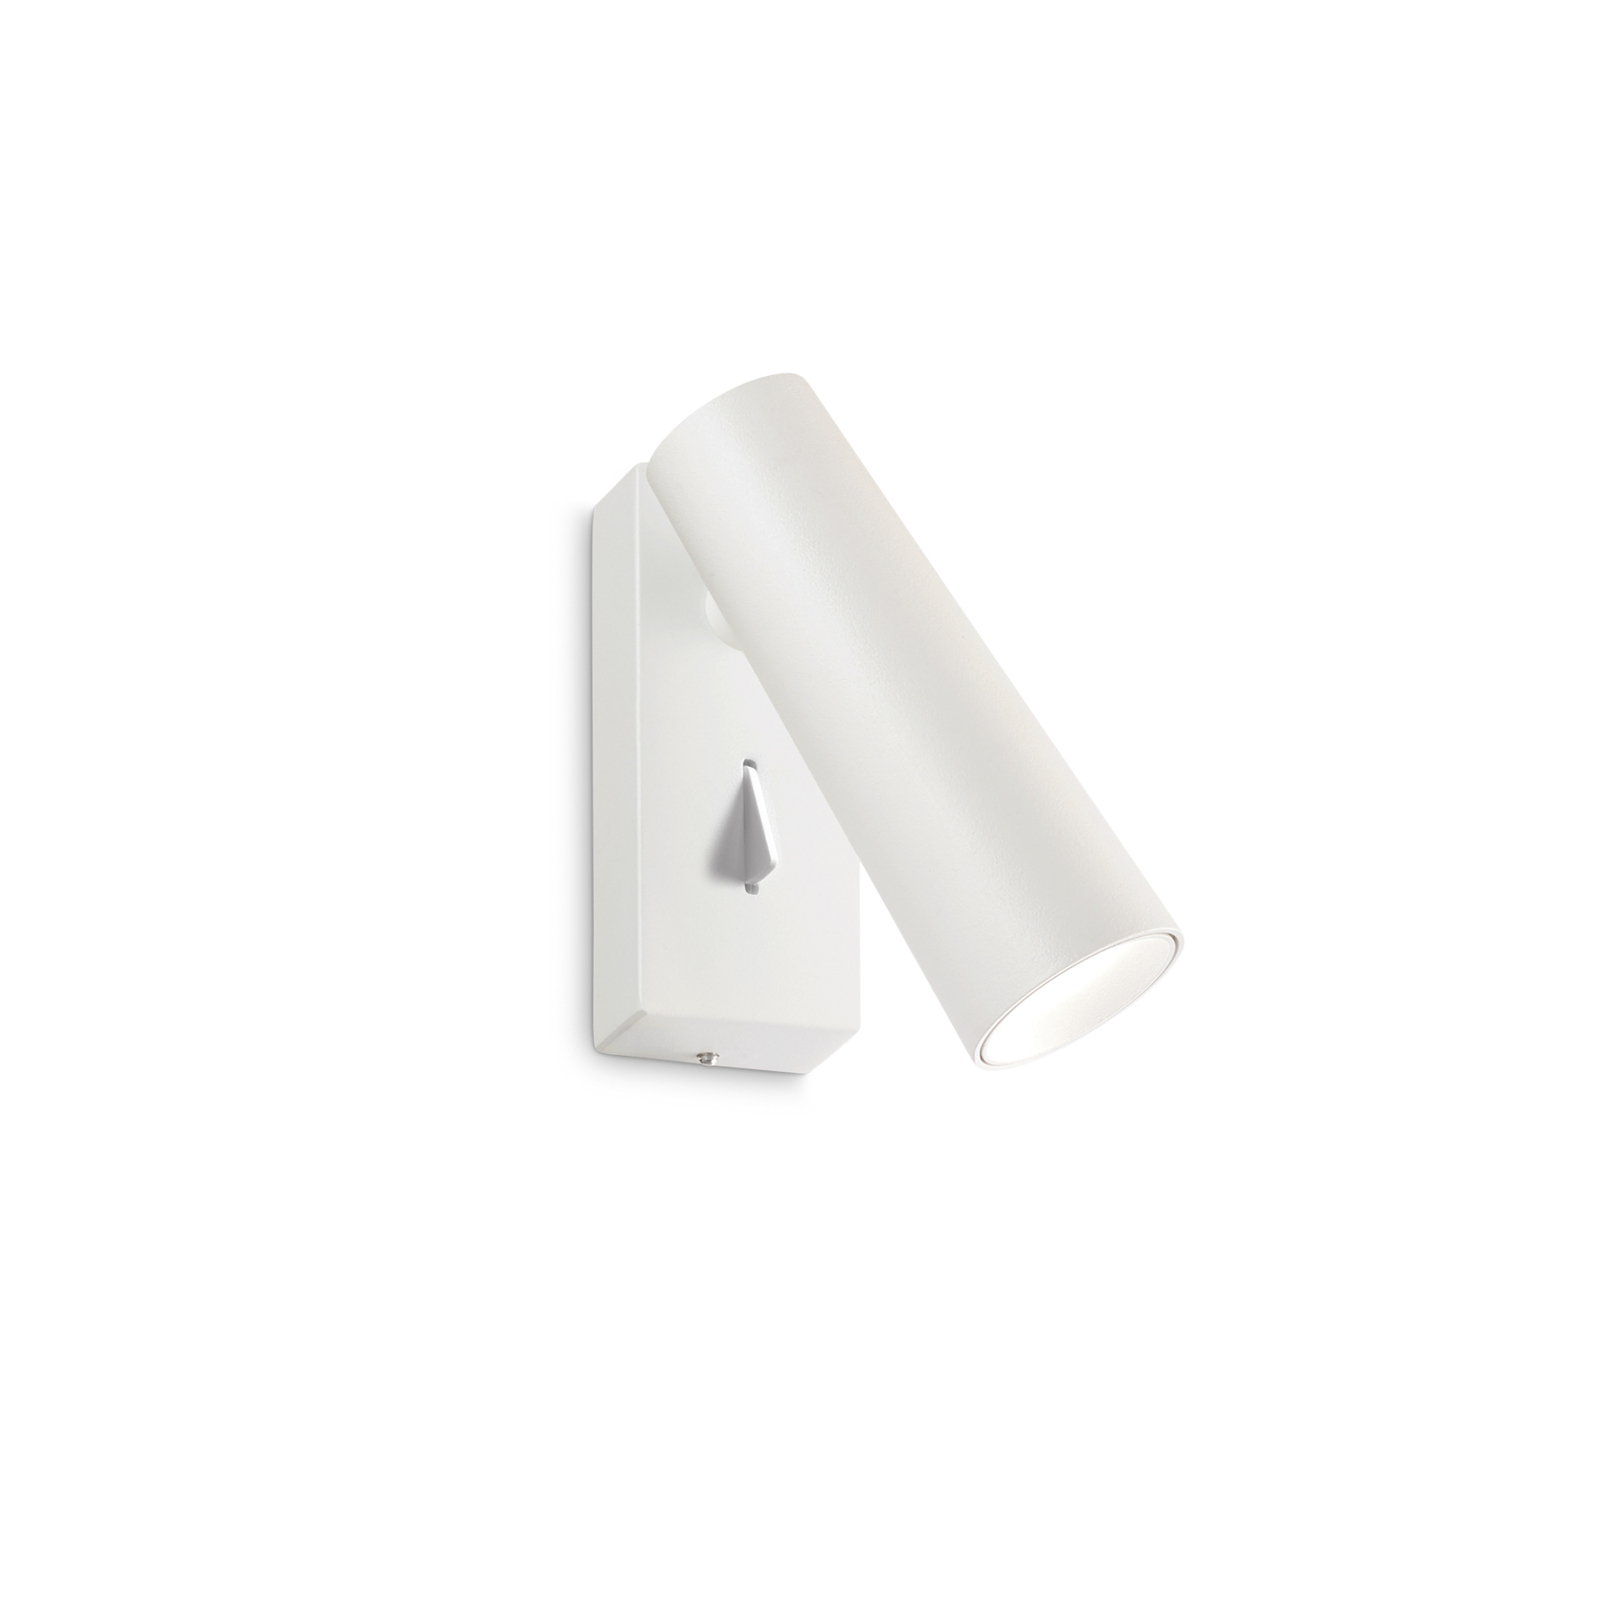 Ideal Lux Pipe aplique LED, ajustable blanco